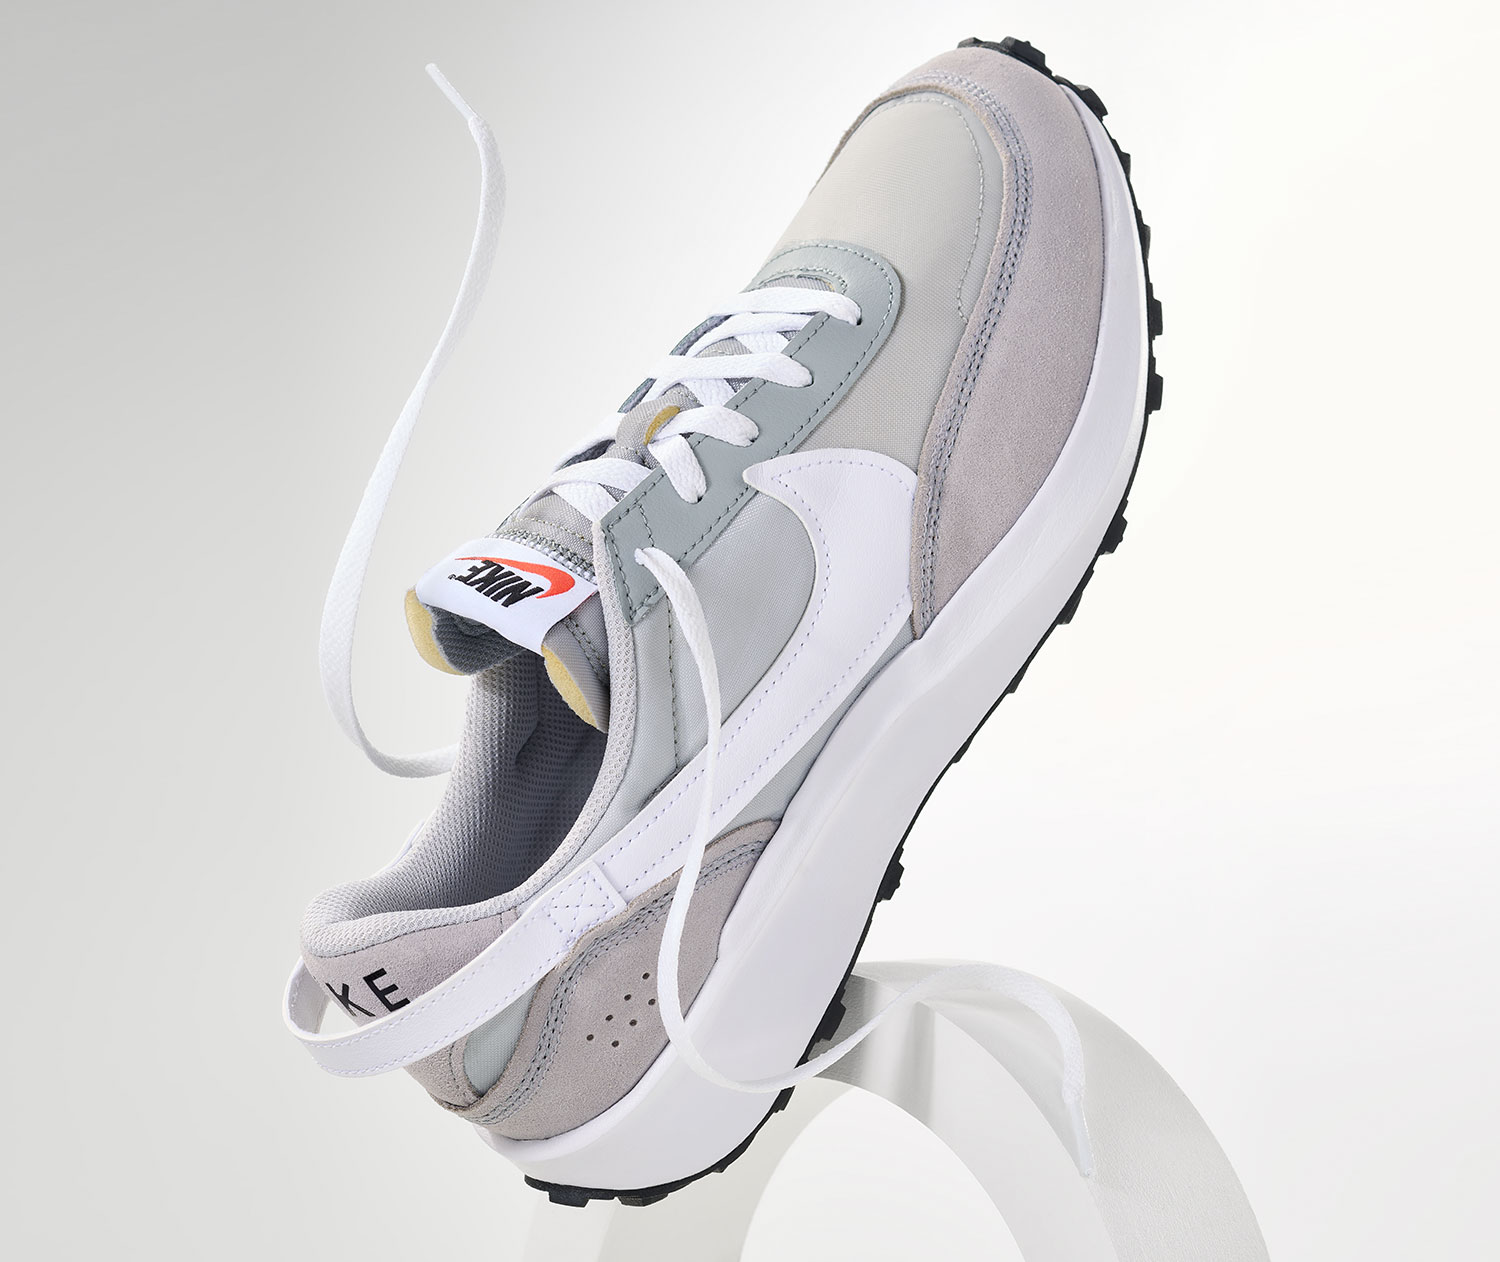 Electricista recibir Vicio Nike Shoes, Sneakers & Slides | Rack Room Shoes